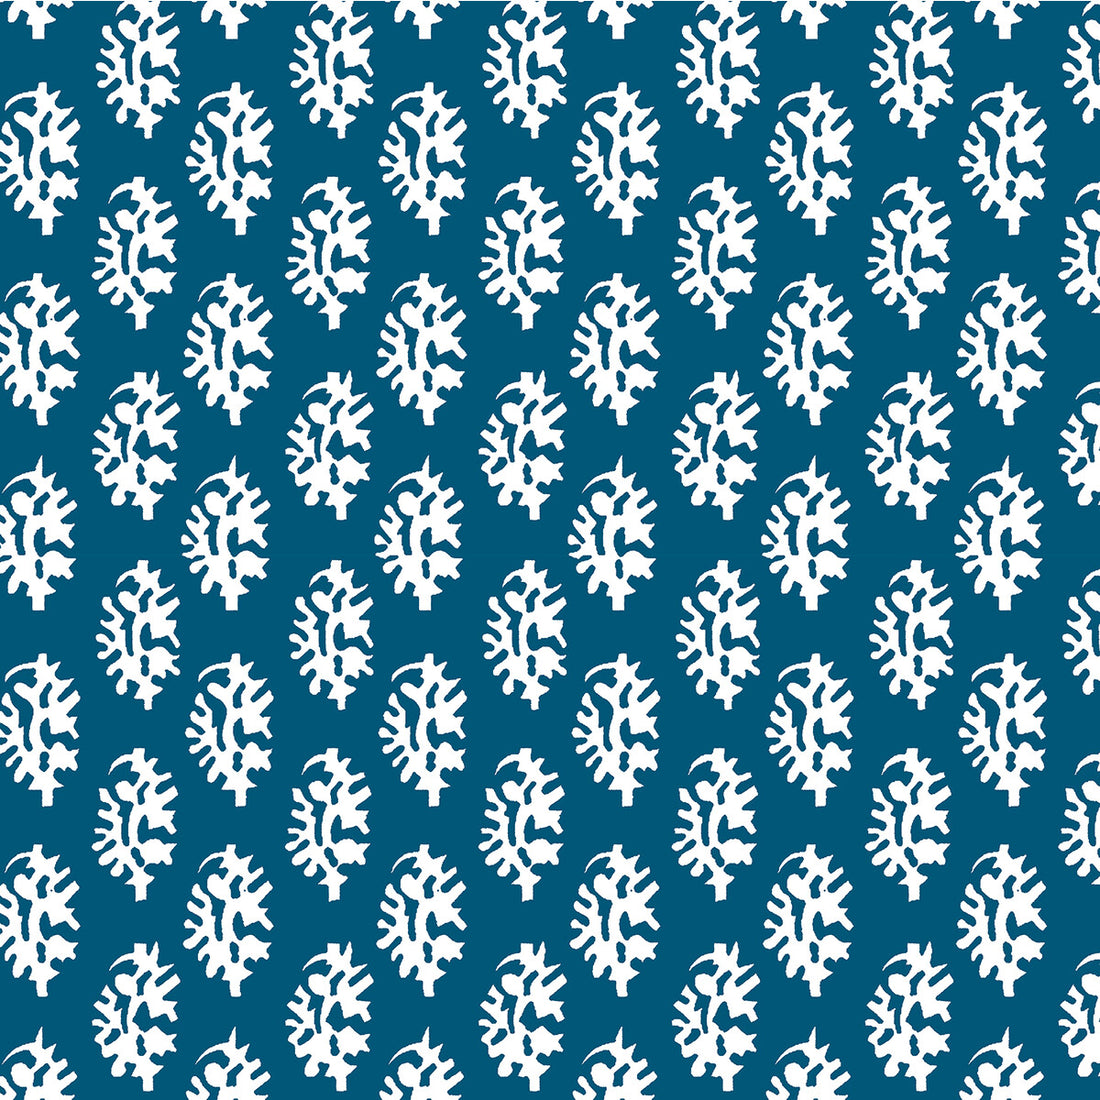 Seijo fabric in azul color - pattern LCT1027.002.0 - by Gaston y Daniela in the Lorenzo Castillo V collection